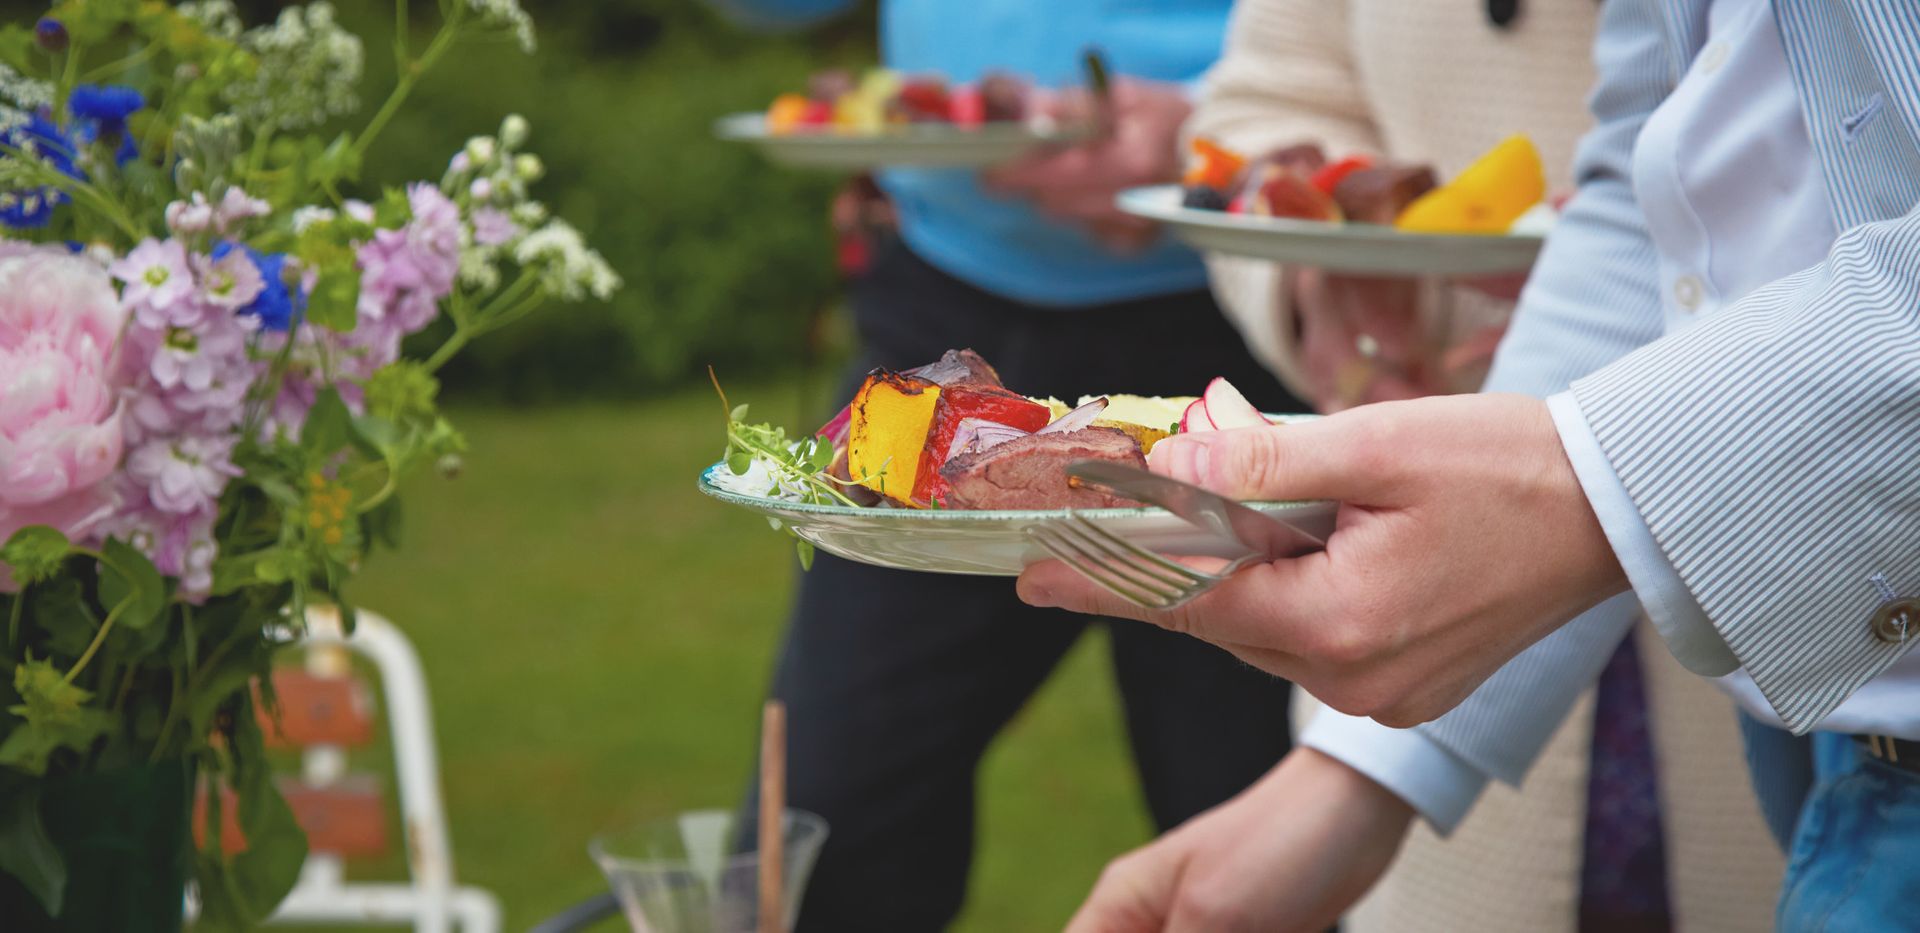 Feast in the summer (Source: Carolina Romare/imagebank.sweden.se)